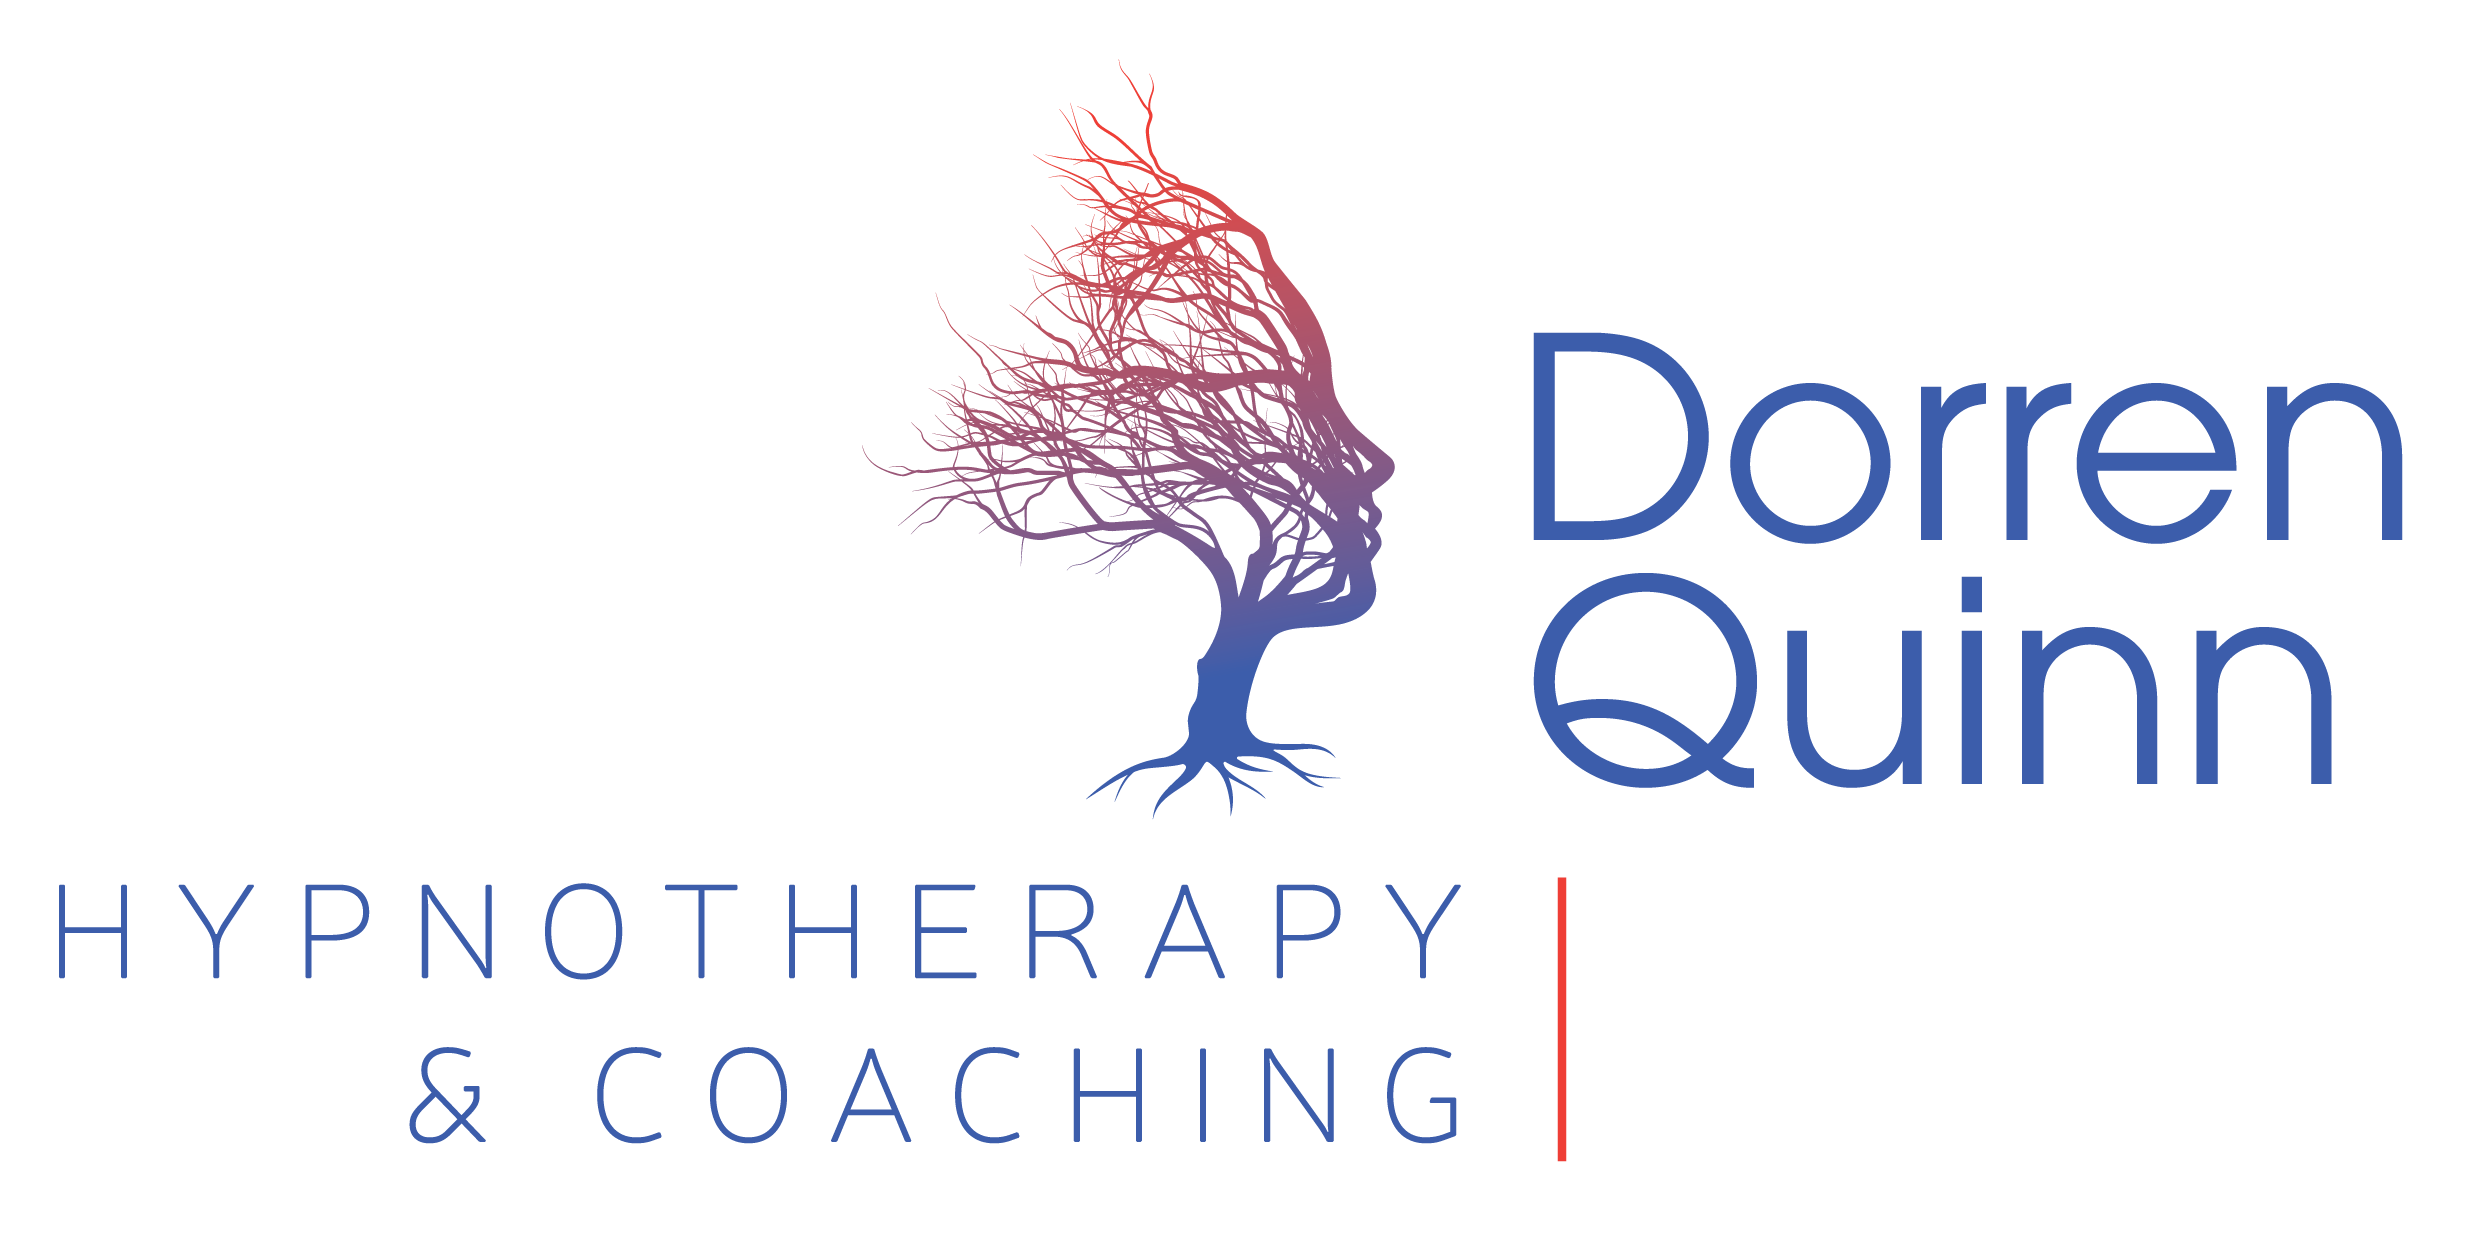 Dorren Quinn Hypnotherapy & Coaching